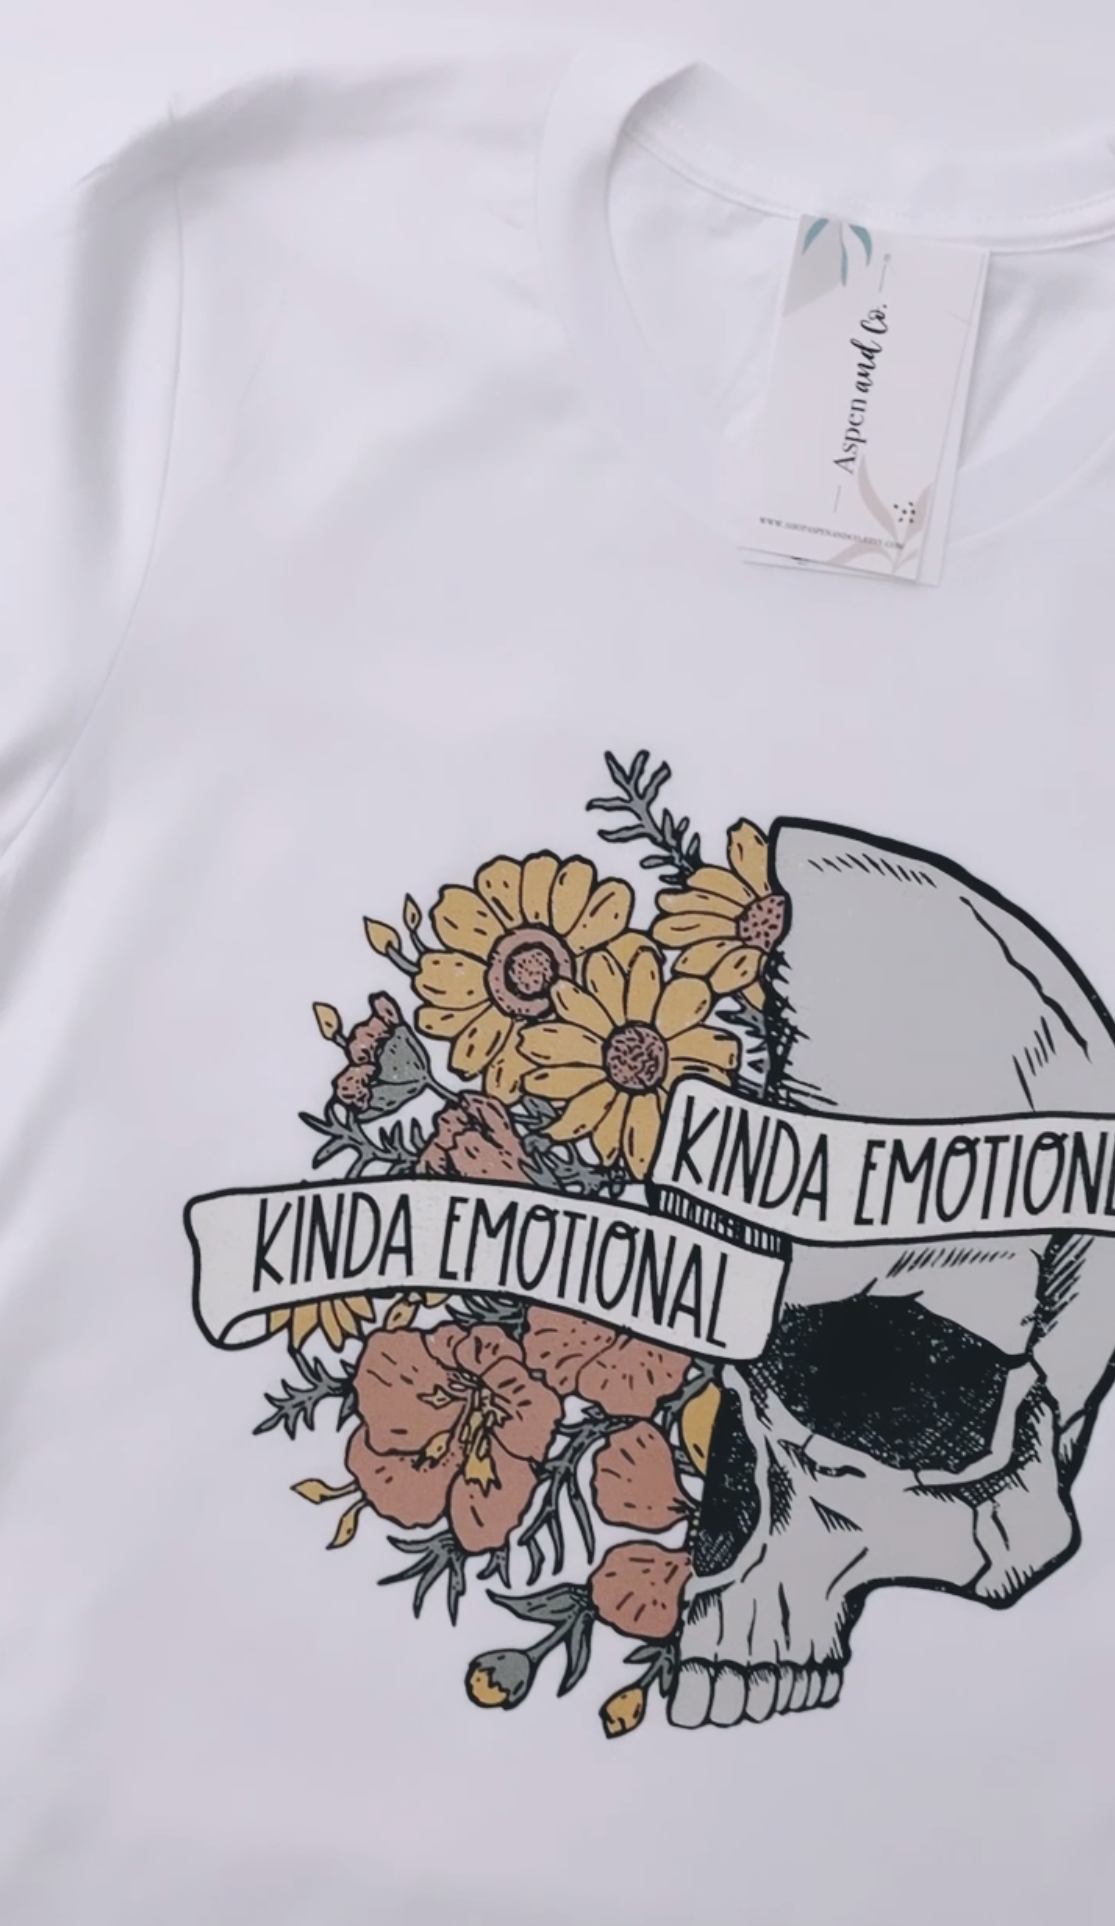 Mental Health T-shirt : Mental Health Awareness T-Shirt reads Kinda Emotional Kinda Emotionless and shows flowers on one side of a human skull